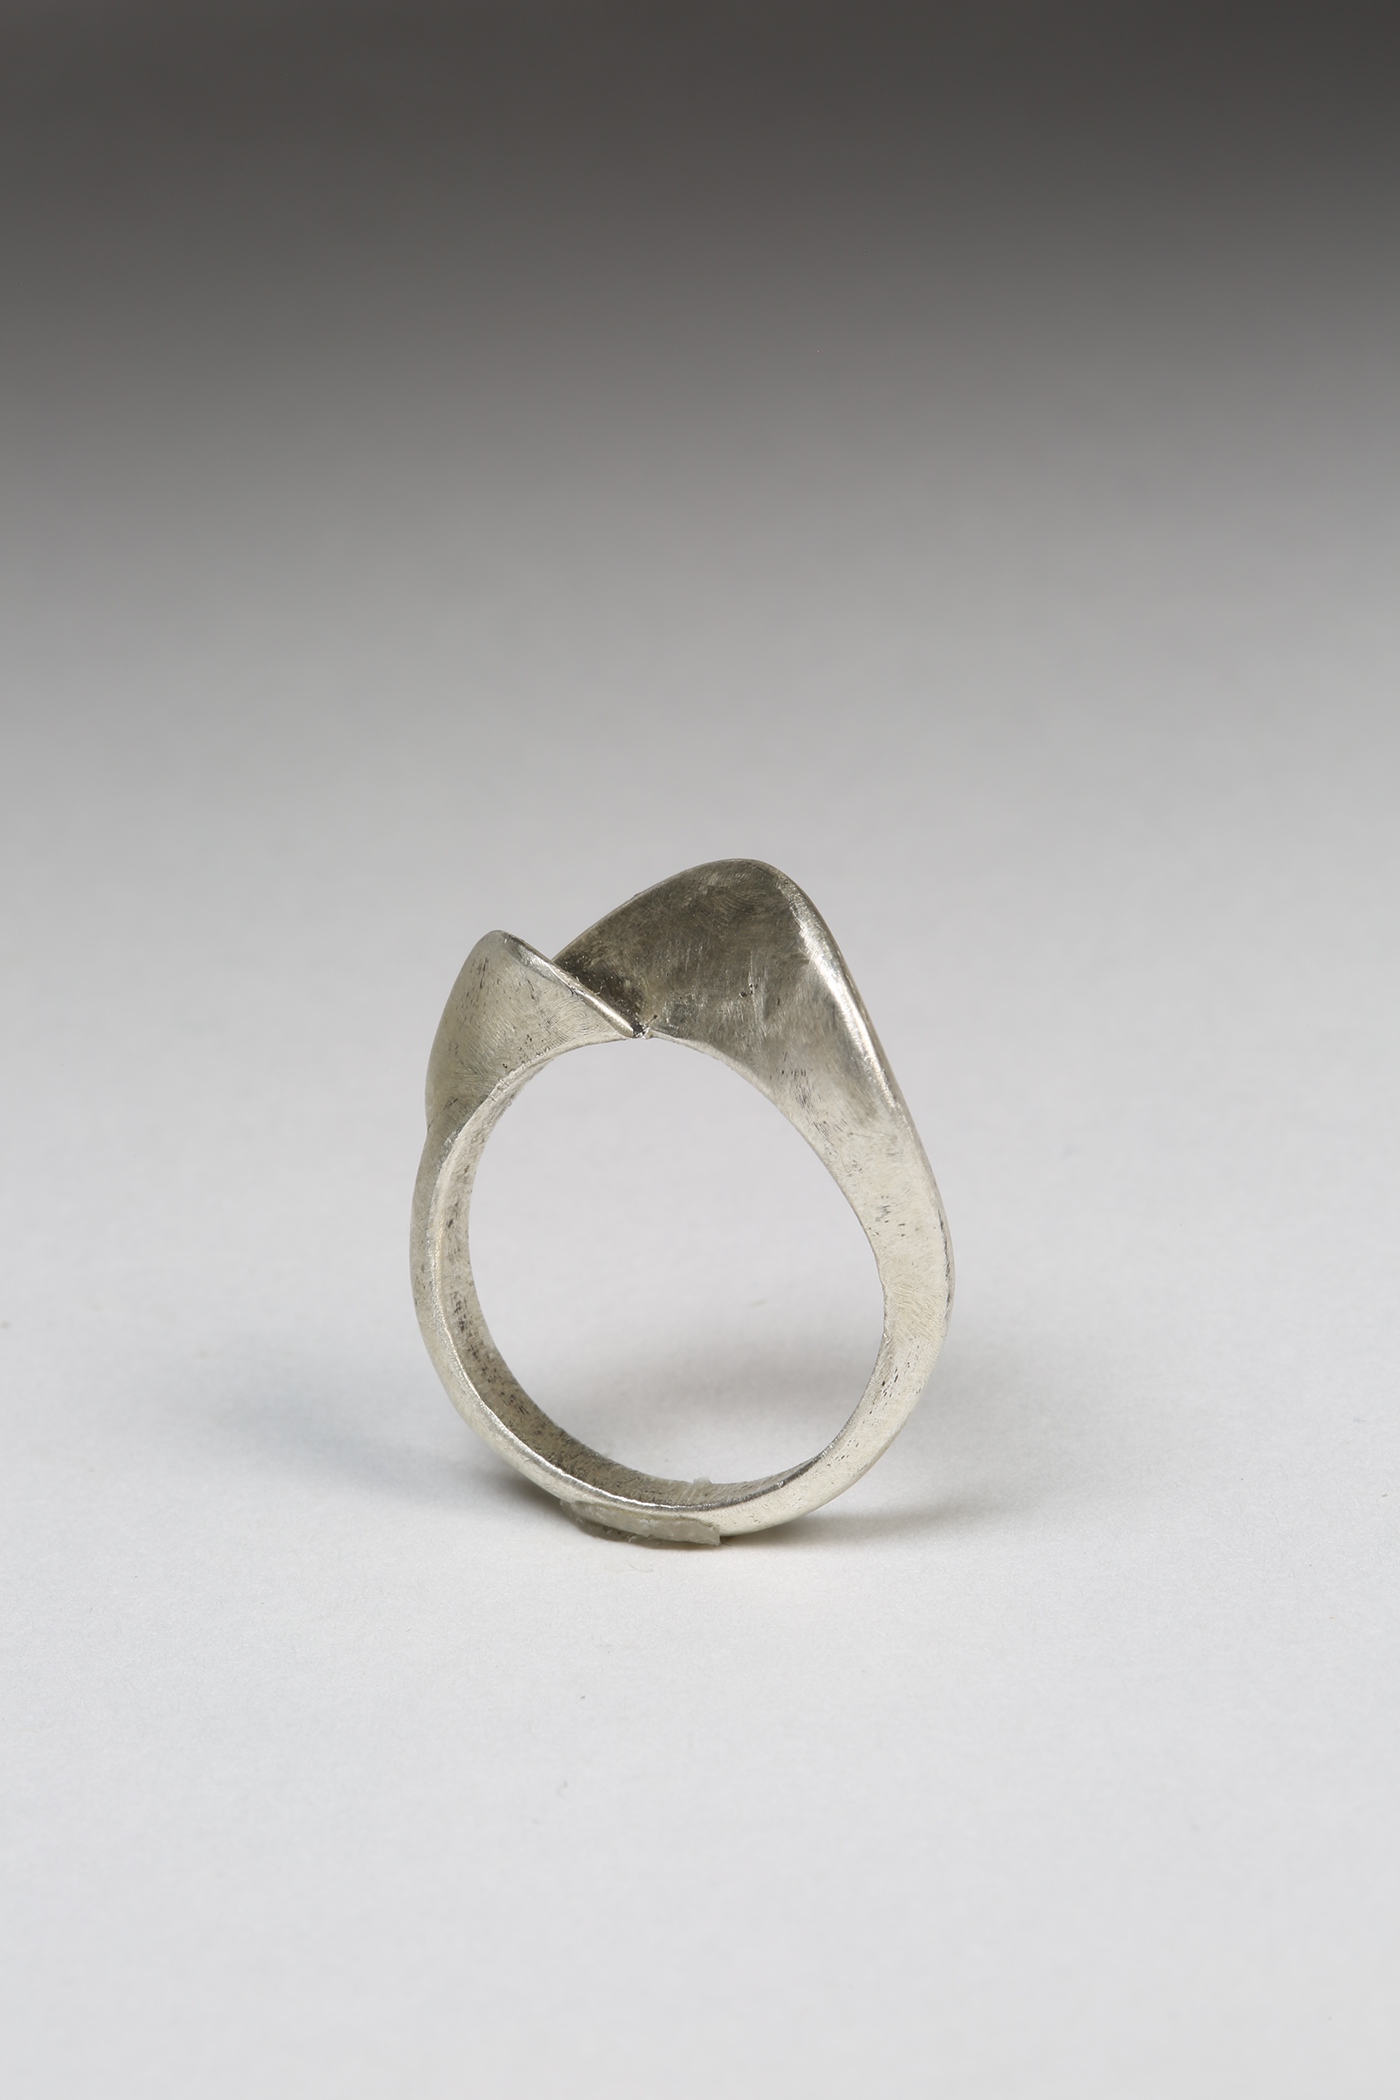 silver cad Rhino ring cast jewelry Jewelry Design 